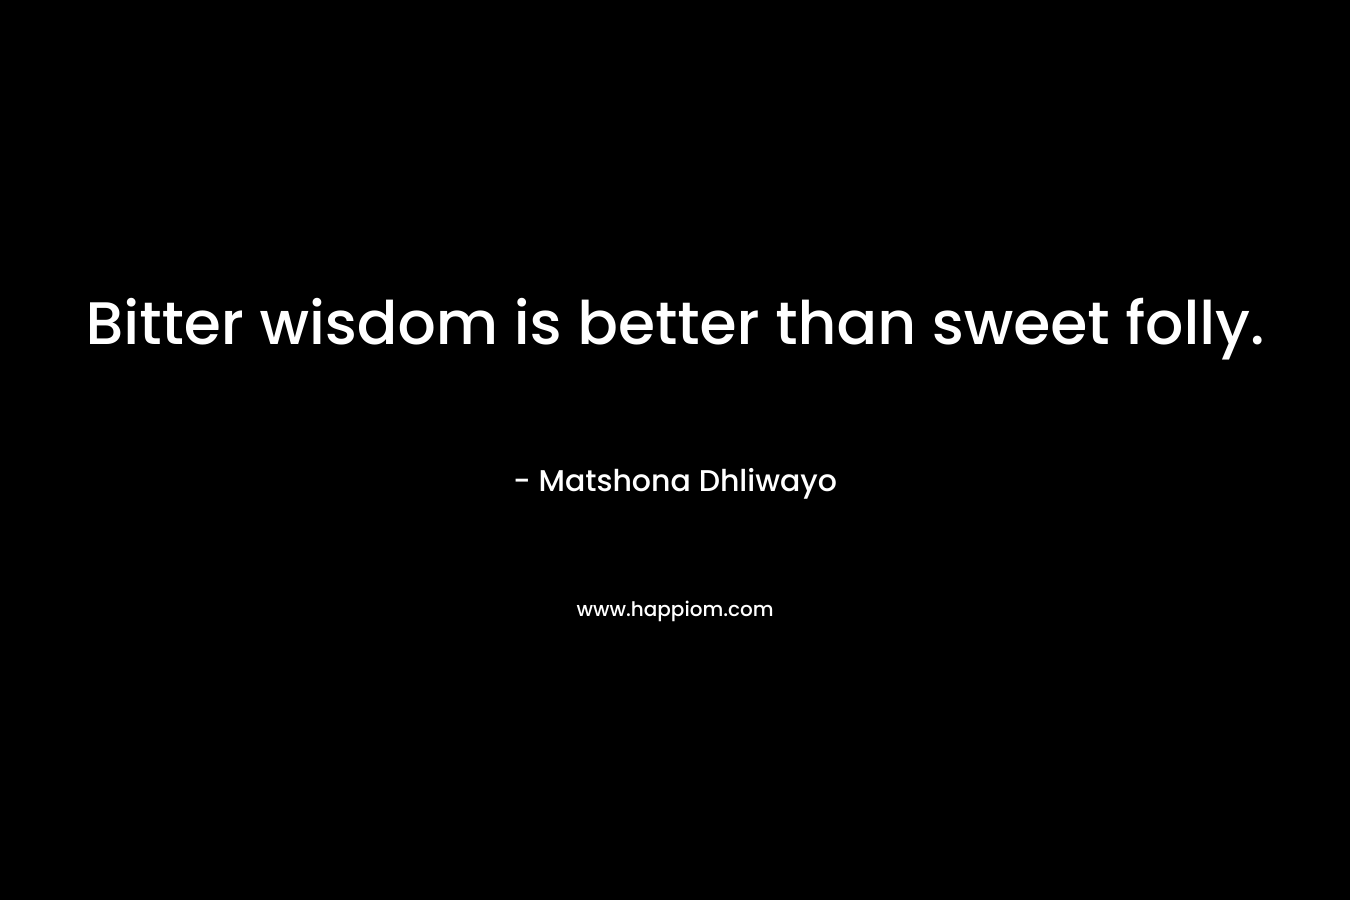 Bitter wisdom is better than sweet folly.